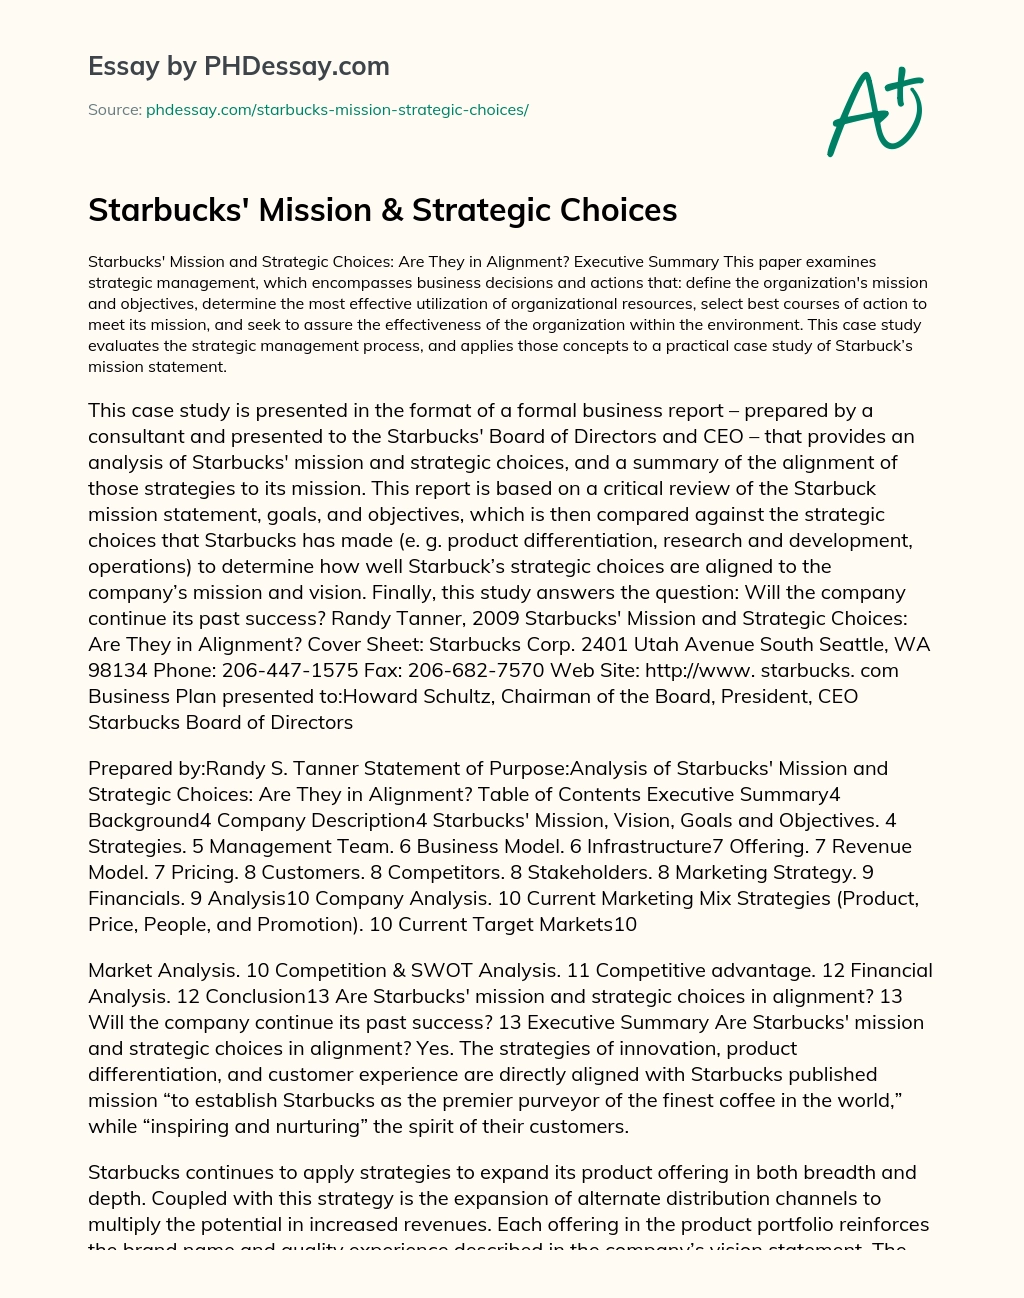 Starbucks’ Mission & Strategic Choices essay